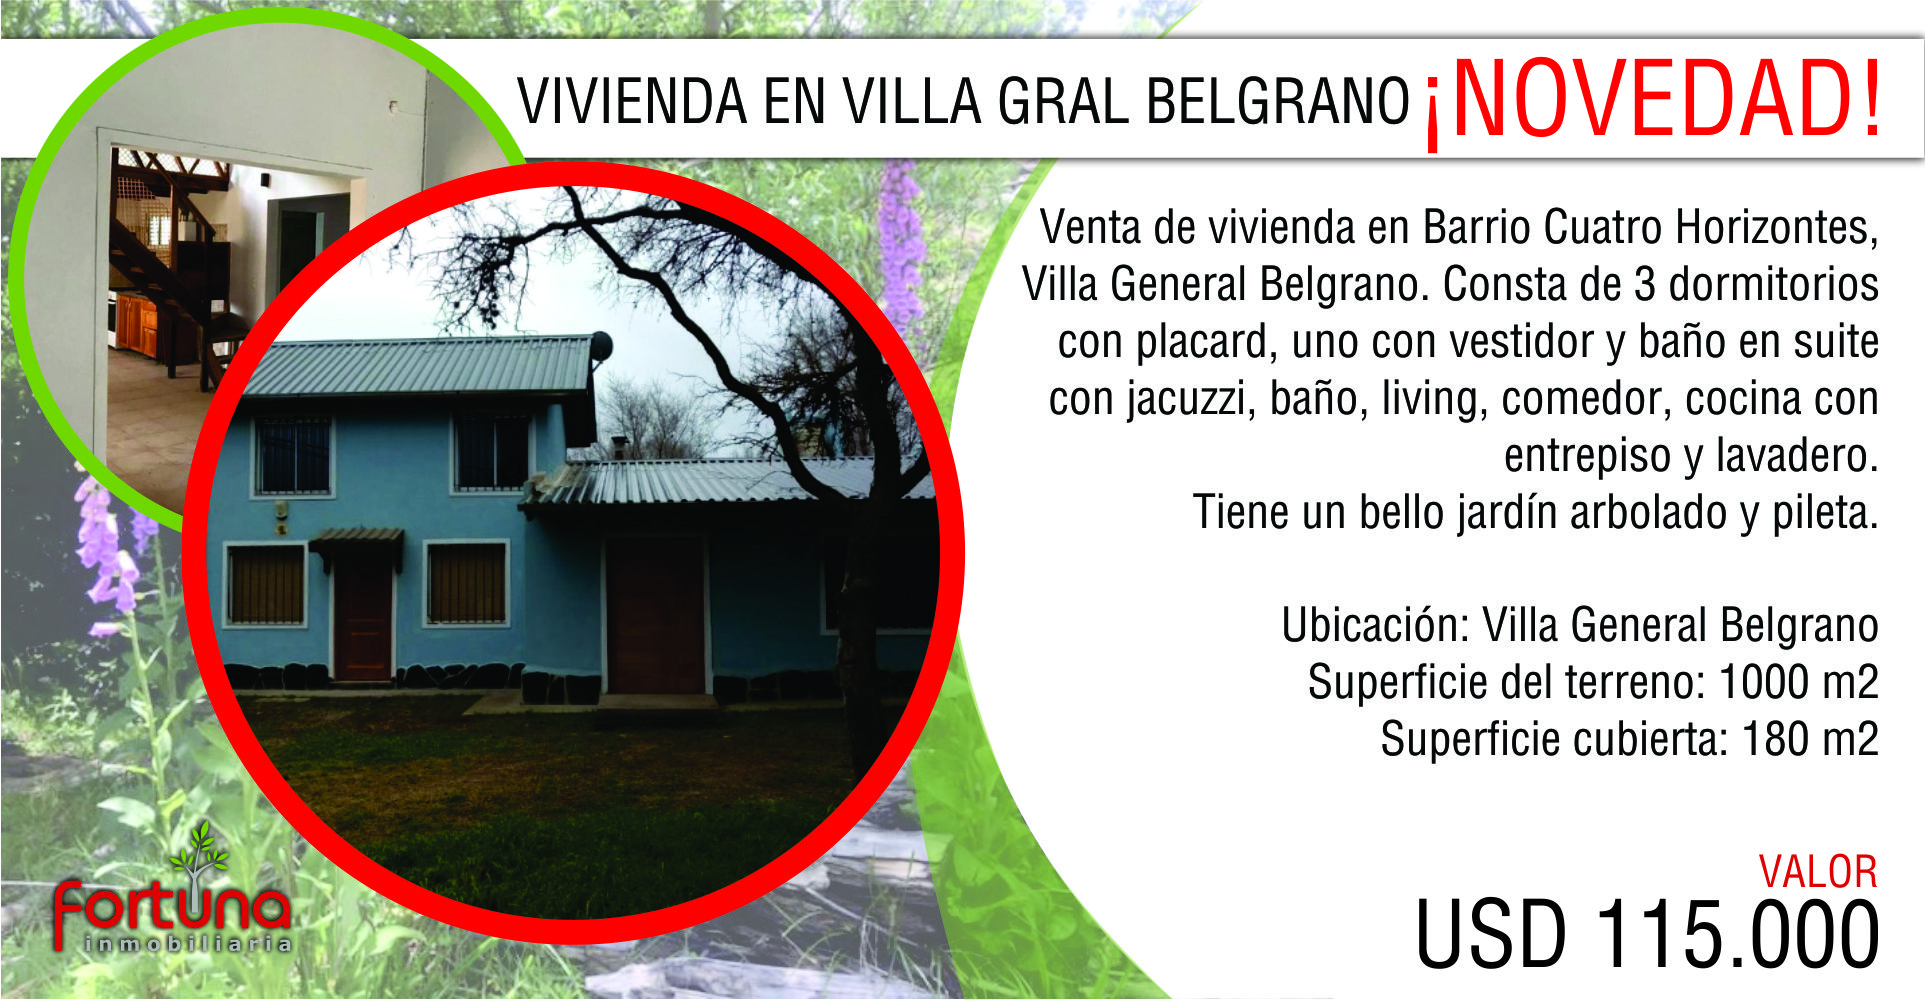 VIV158-viviendasenventa-ventadecasas-fortunainmobiliaria-villageneralbelgrano